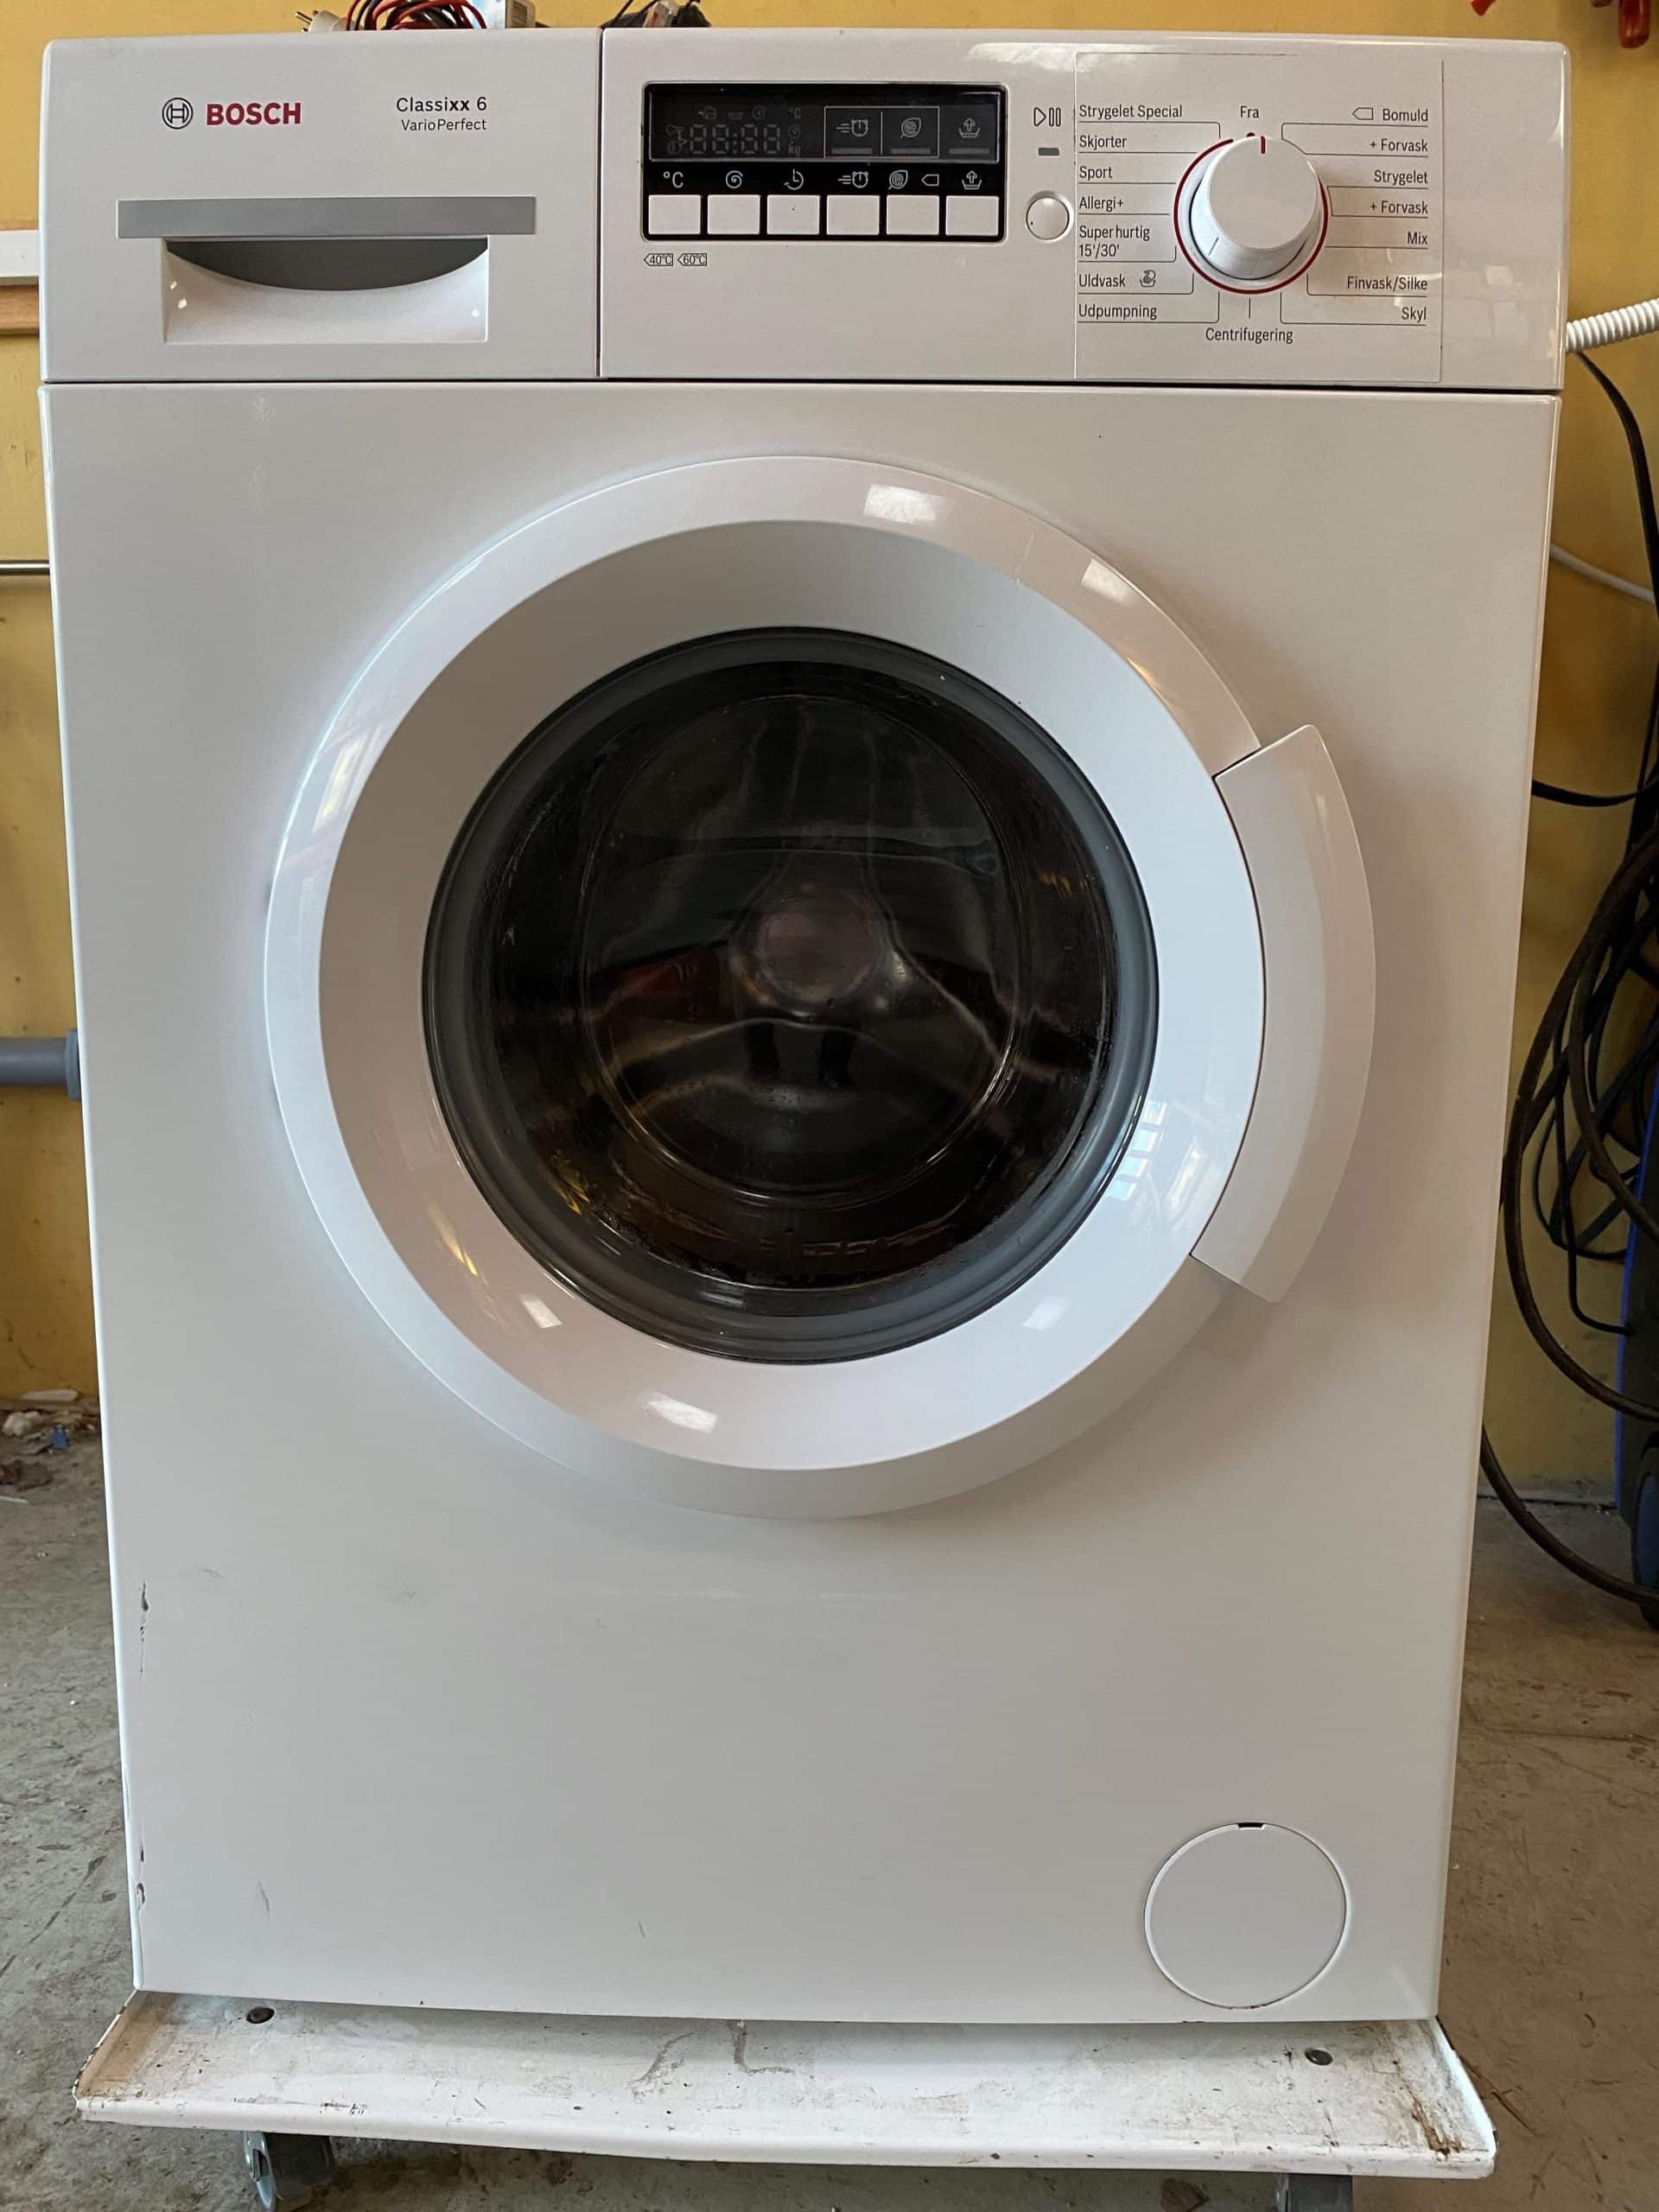 Brugt Bosch vaskemaskine - Sa-Service Andersen